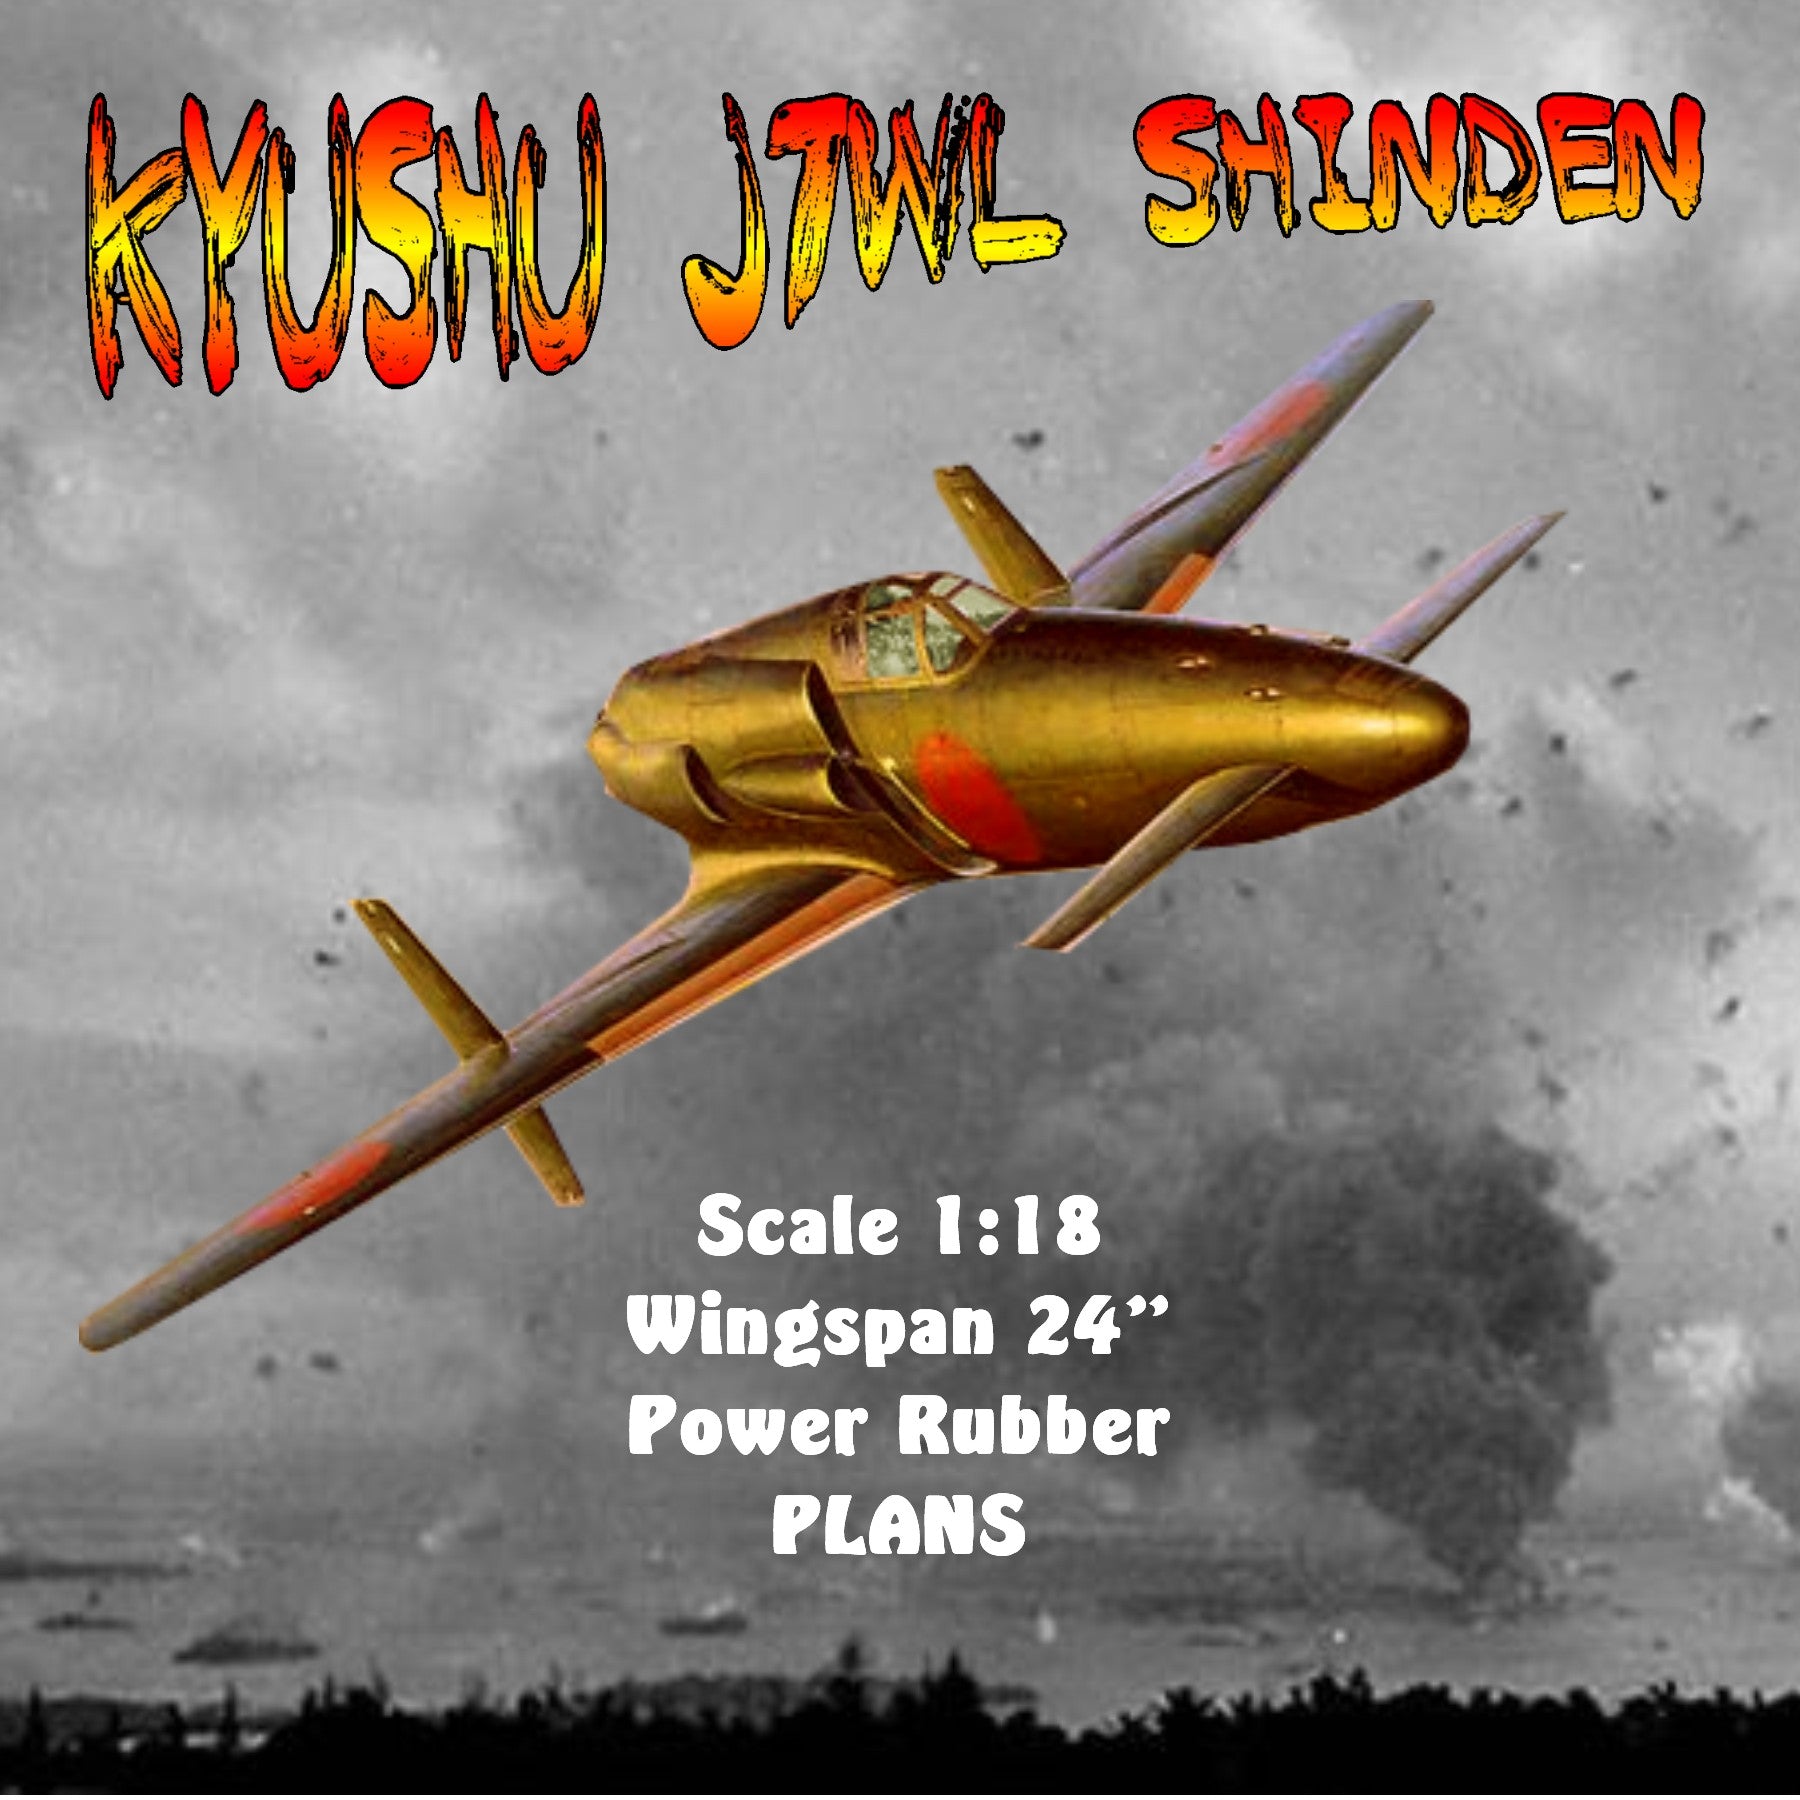 full size printed plan kyushu j7wl shinden scale 1:18  wingspan 24”  power rubber